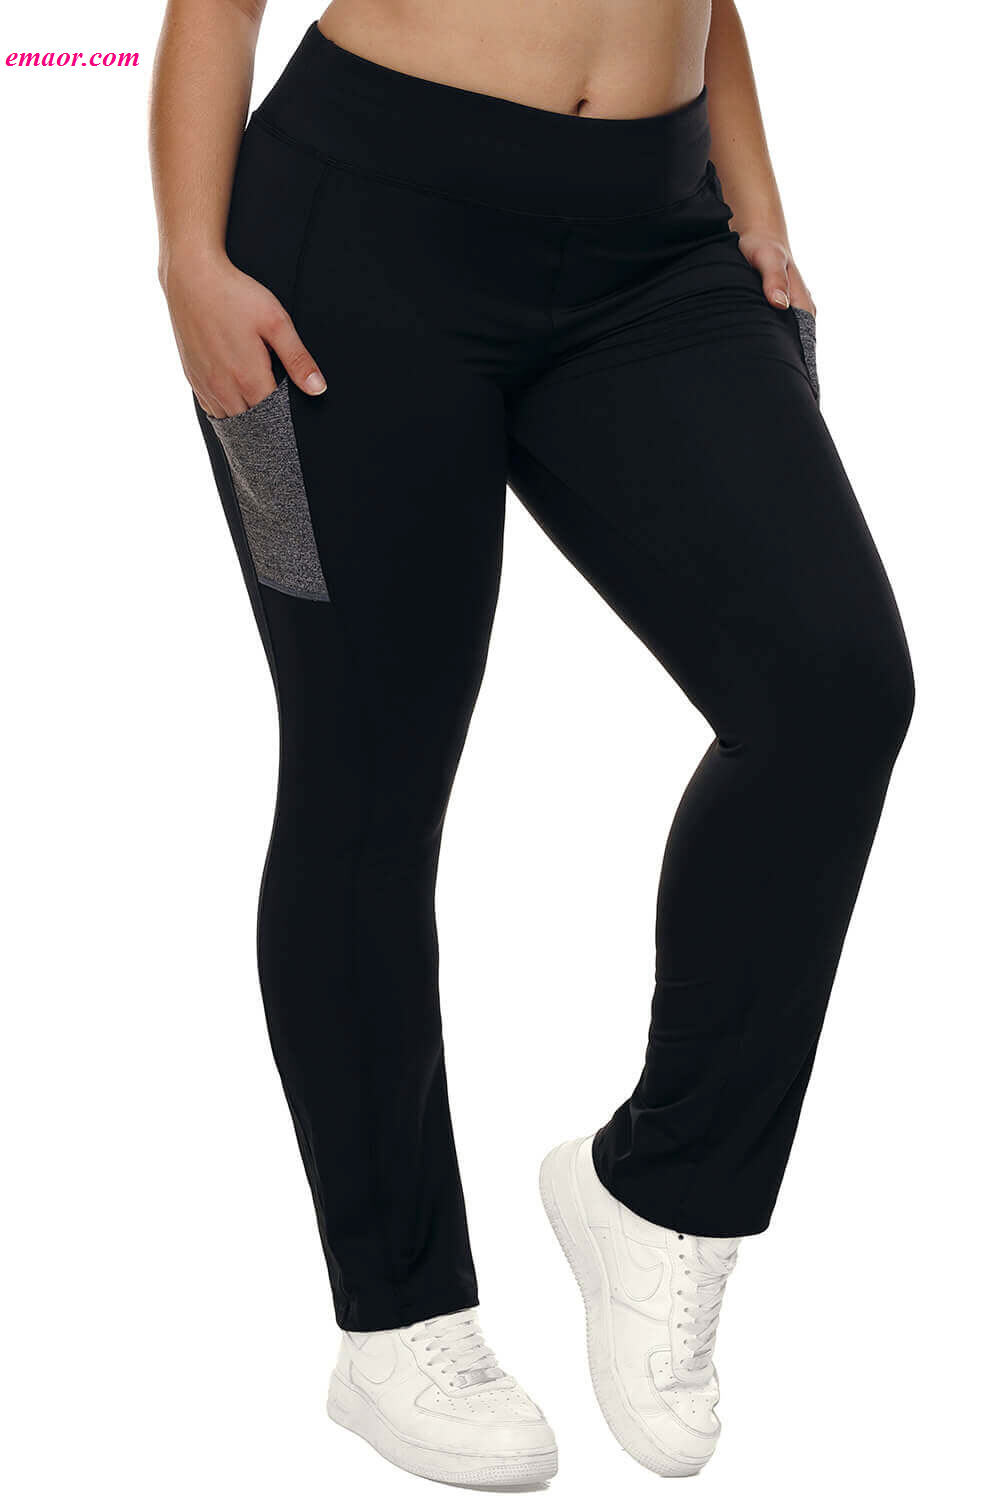 Hot High Waist Tummy Control Workout Bootleg Yoga Pants Yoga Pants Girls on Sale 